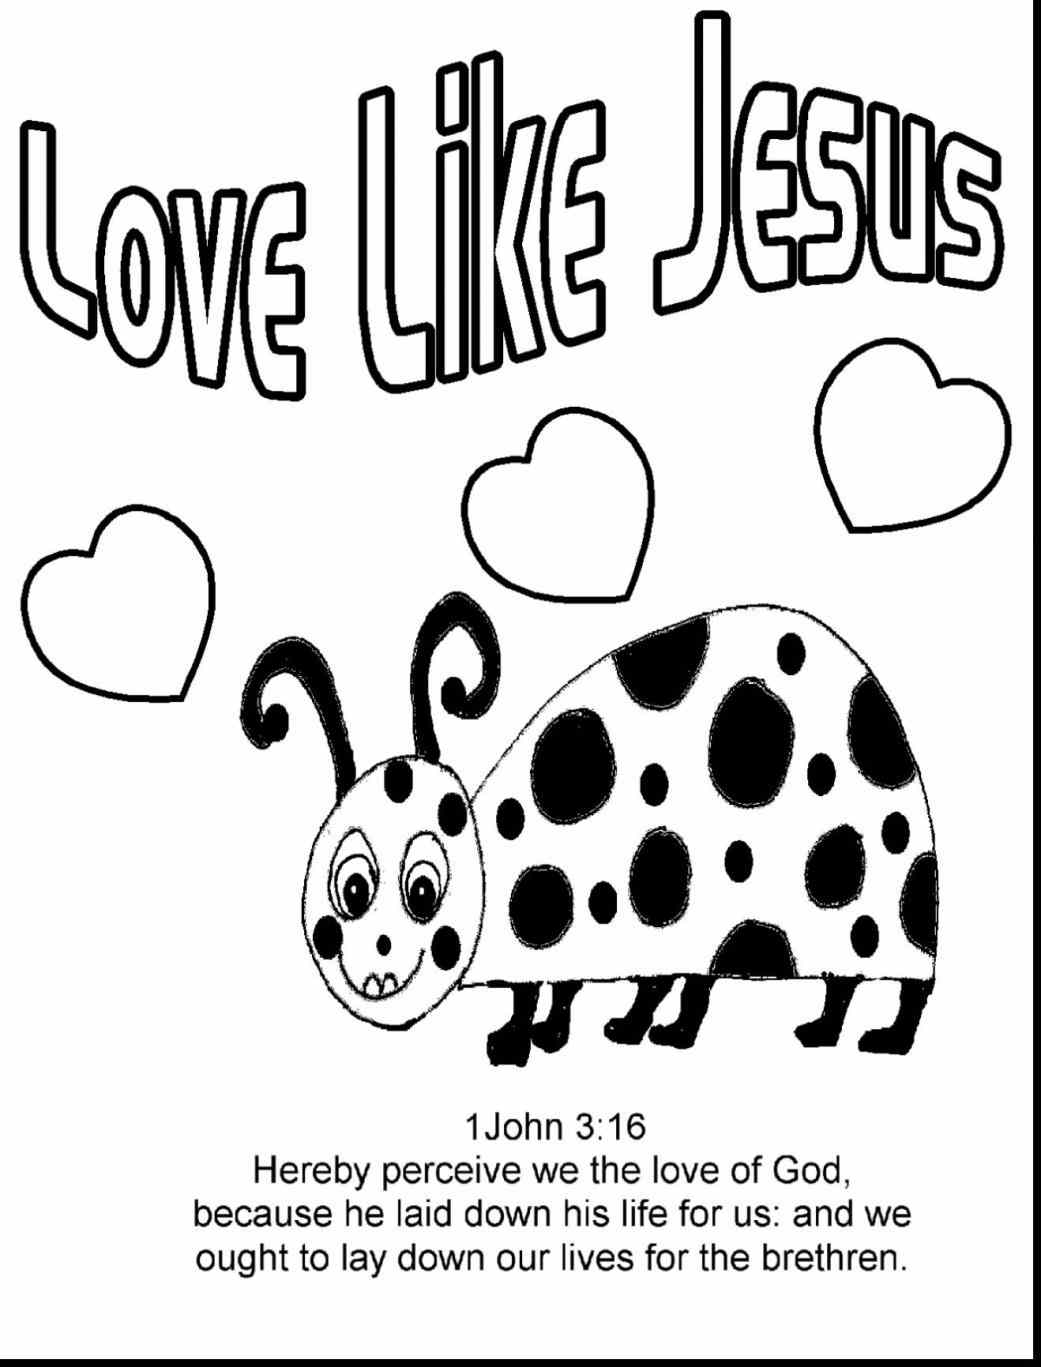 Jesus Loves Me Coloring Page at GetColorings.com | Free printable